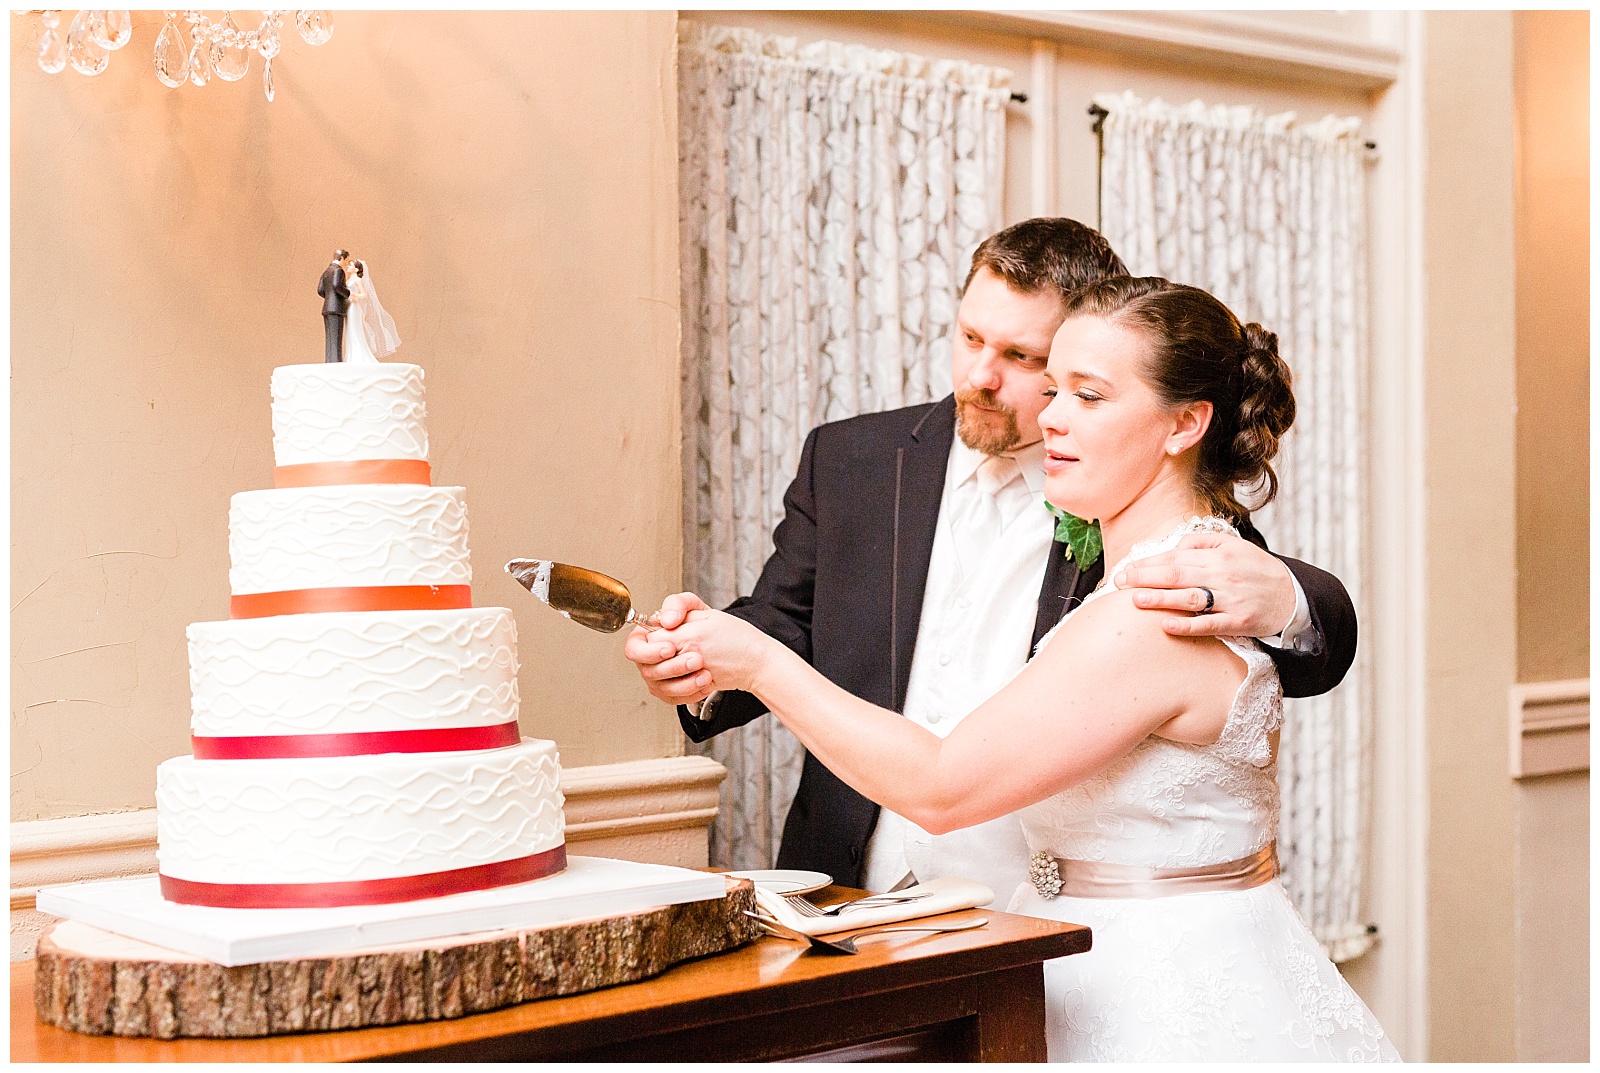 Cake Cutting,David's Country Inn,Fall Wedding,Hackettstown,NJ Wedding Photographer,